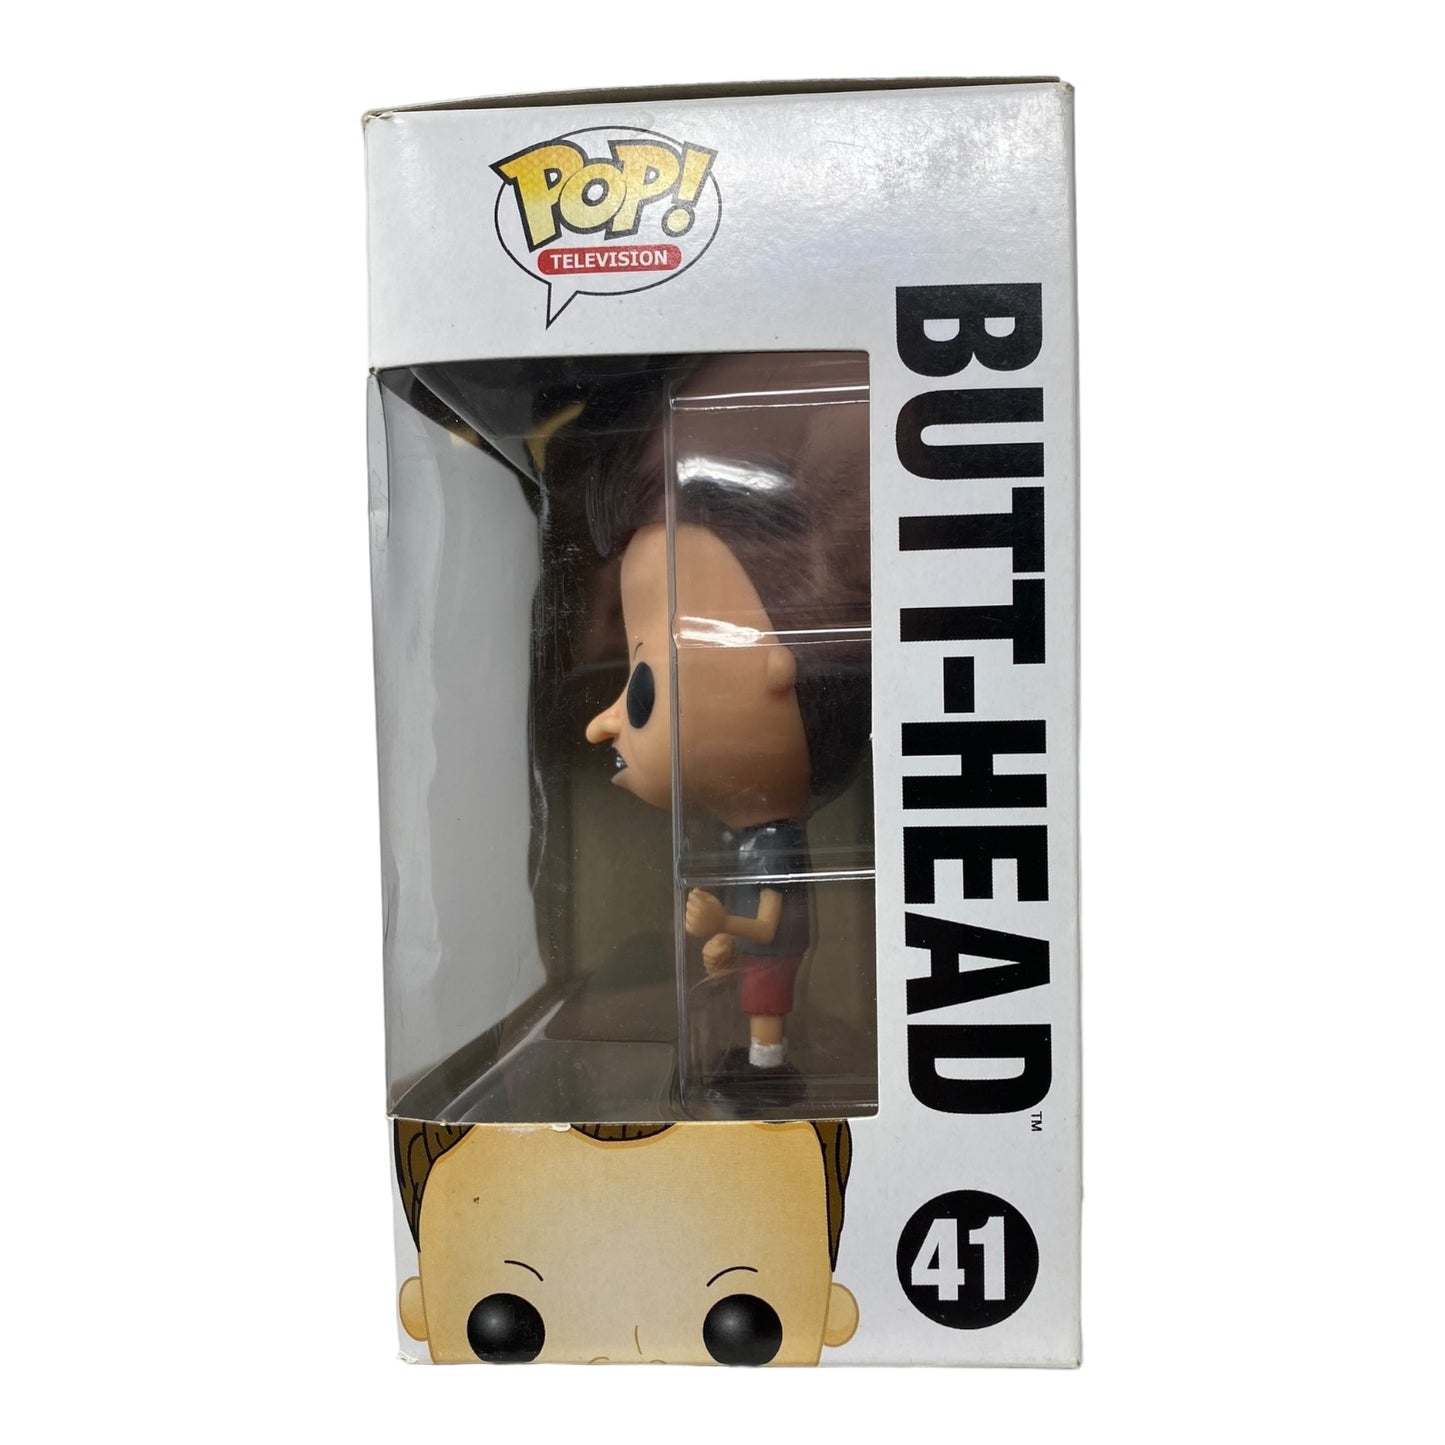 Sold - 2013 - Butt-Head 41 (Box Damaged)